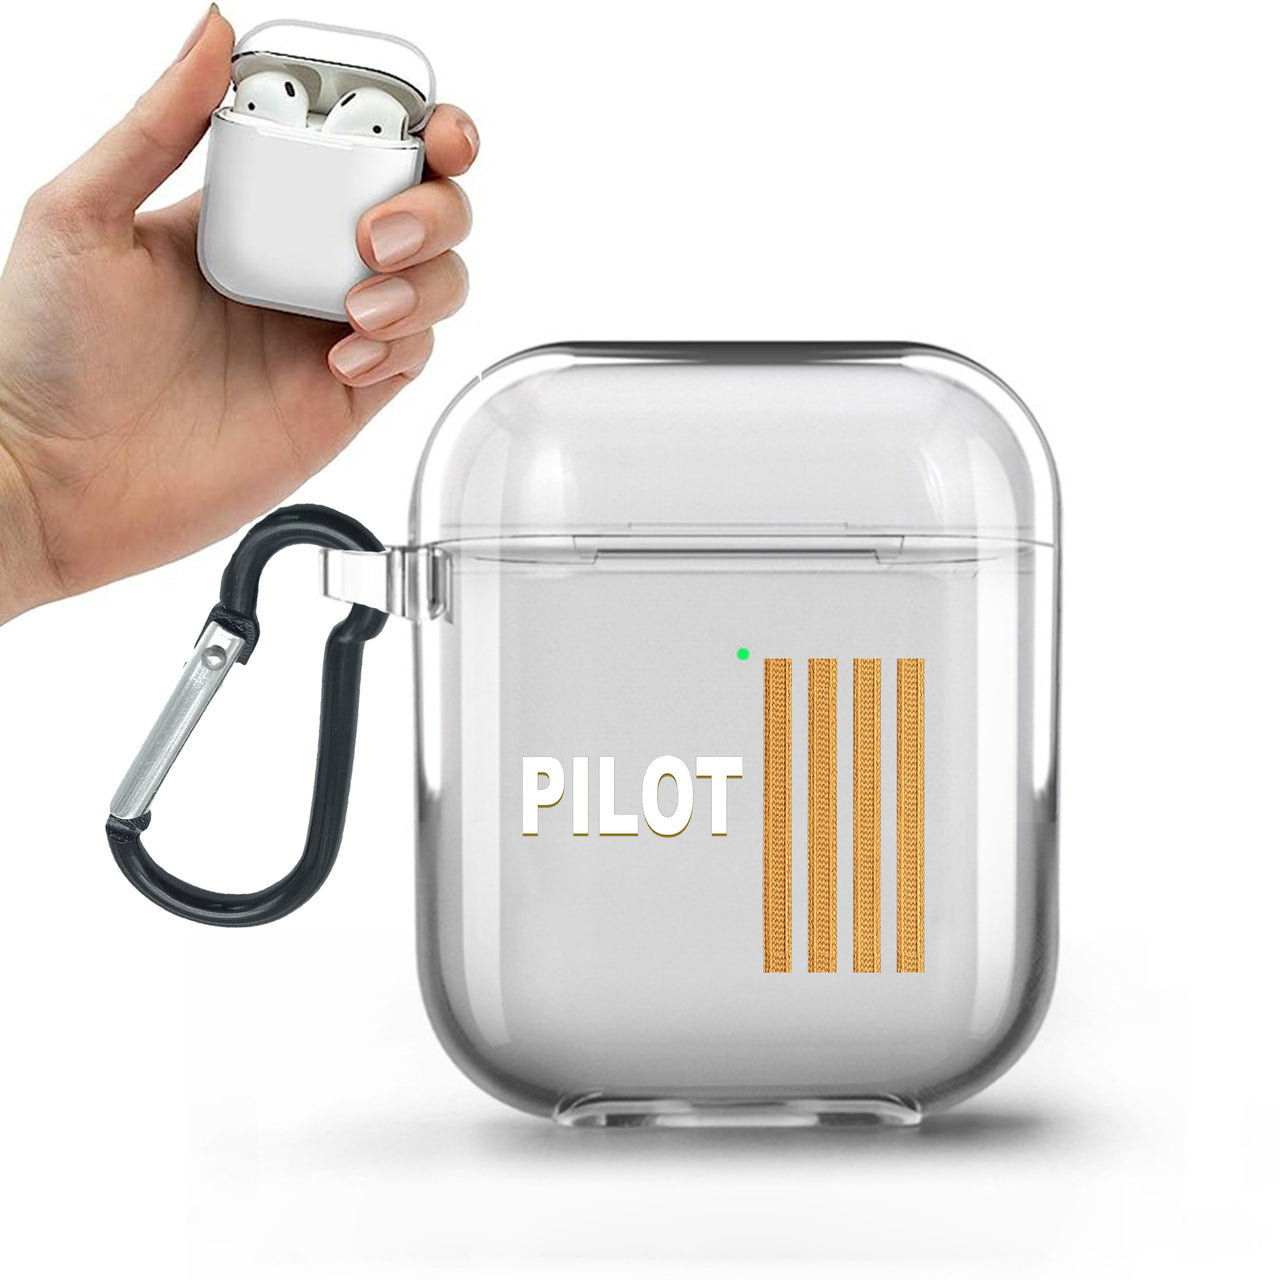 PILOT & Pilot Epaulettes (4,3,2 Lines) Designed Transparent Earphone AirPods Cases